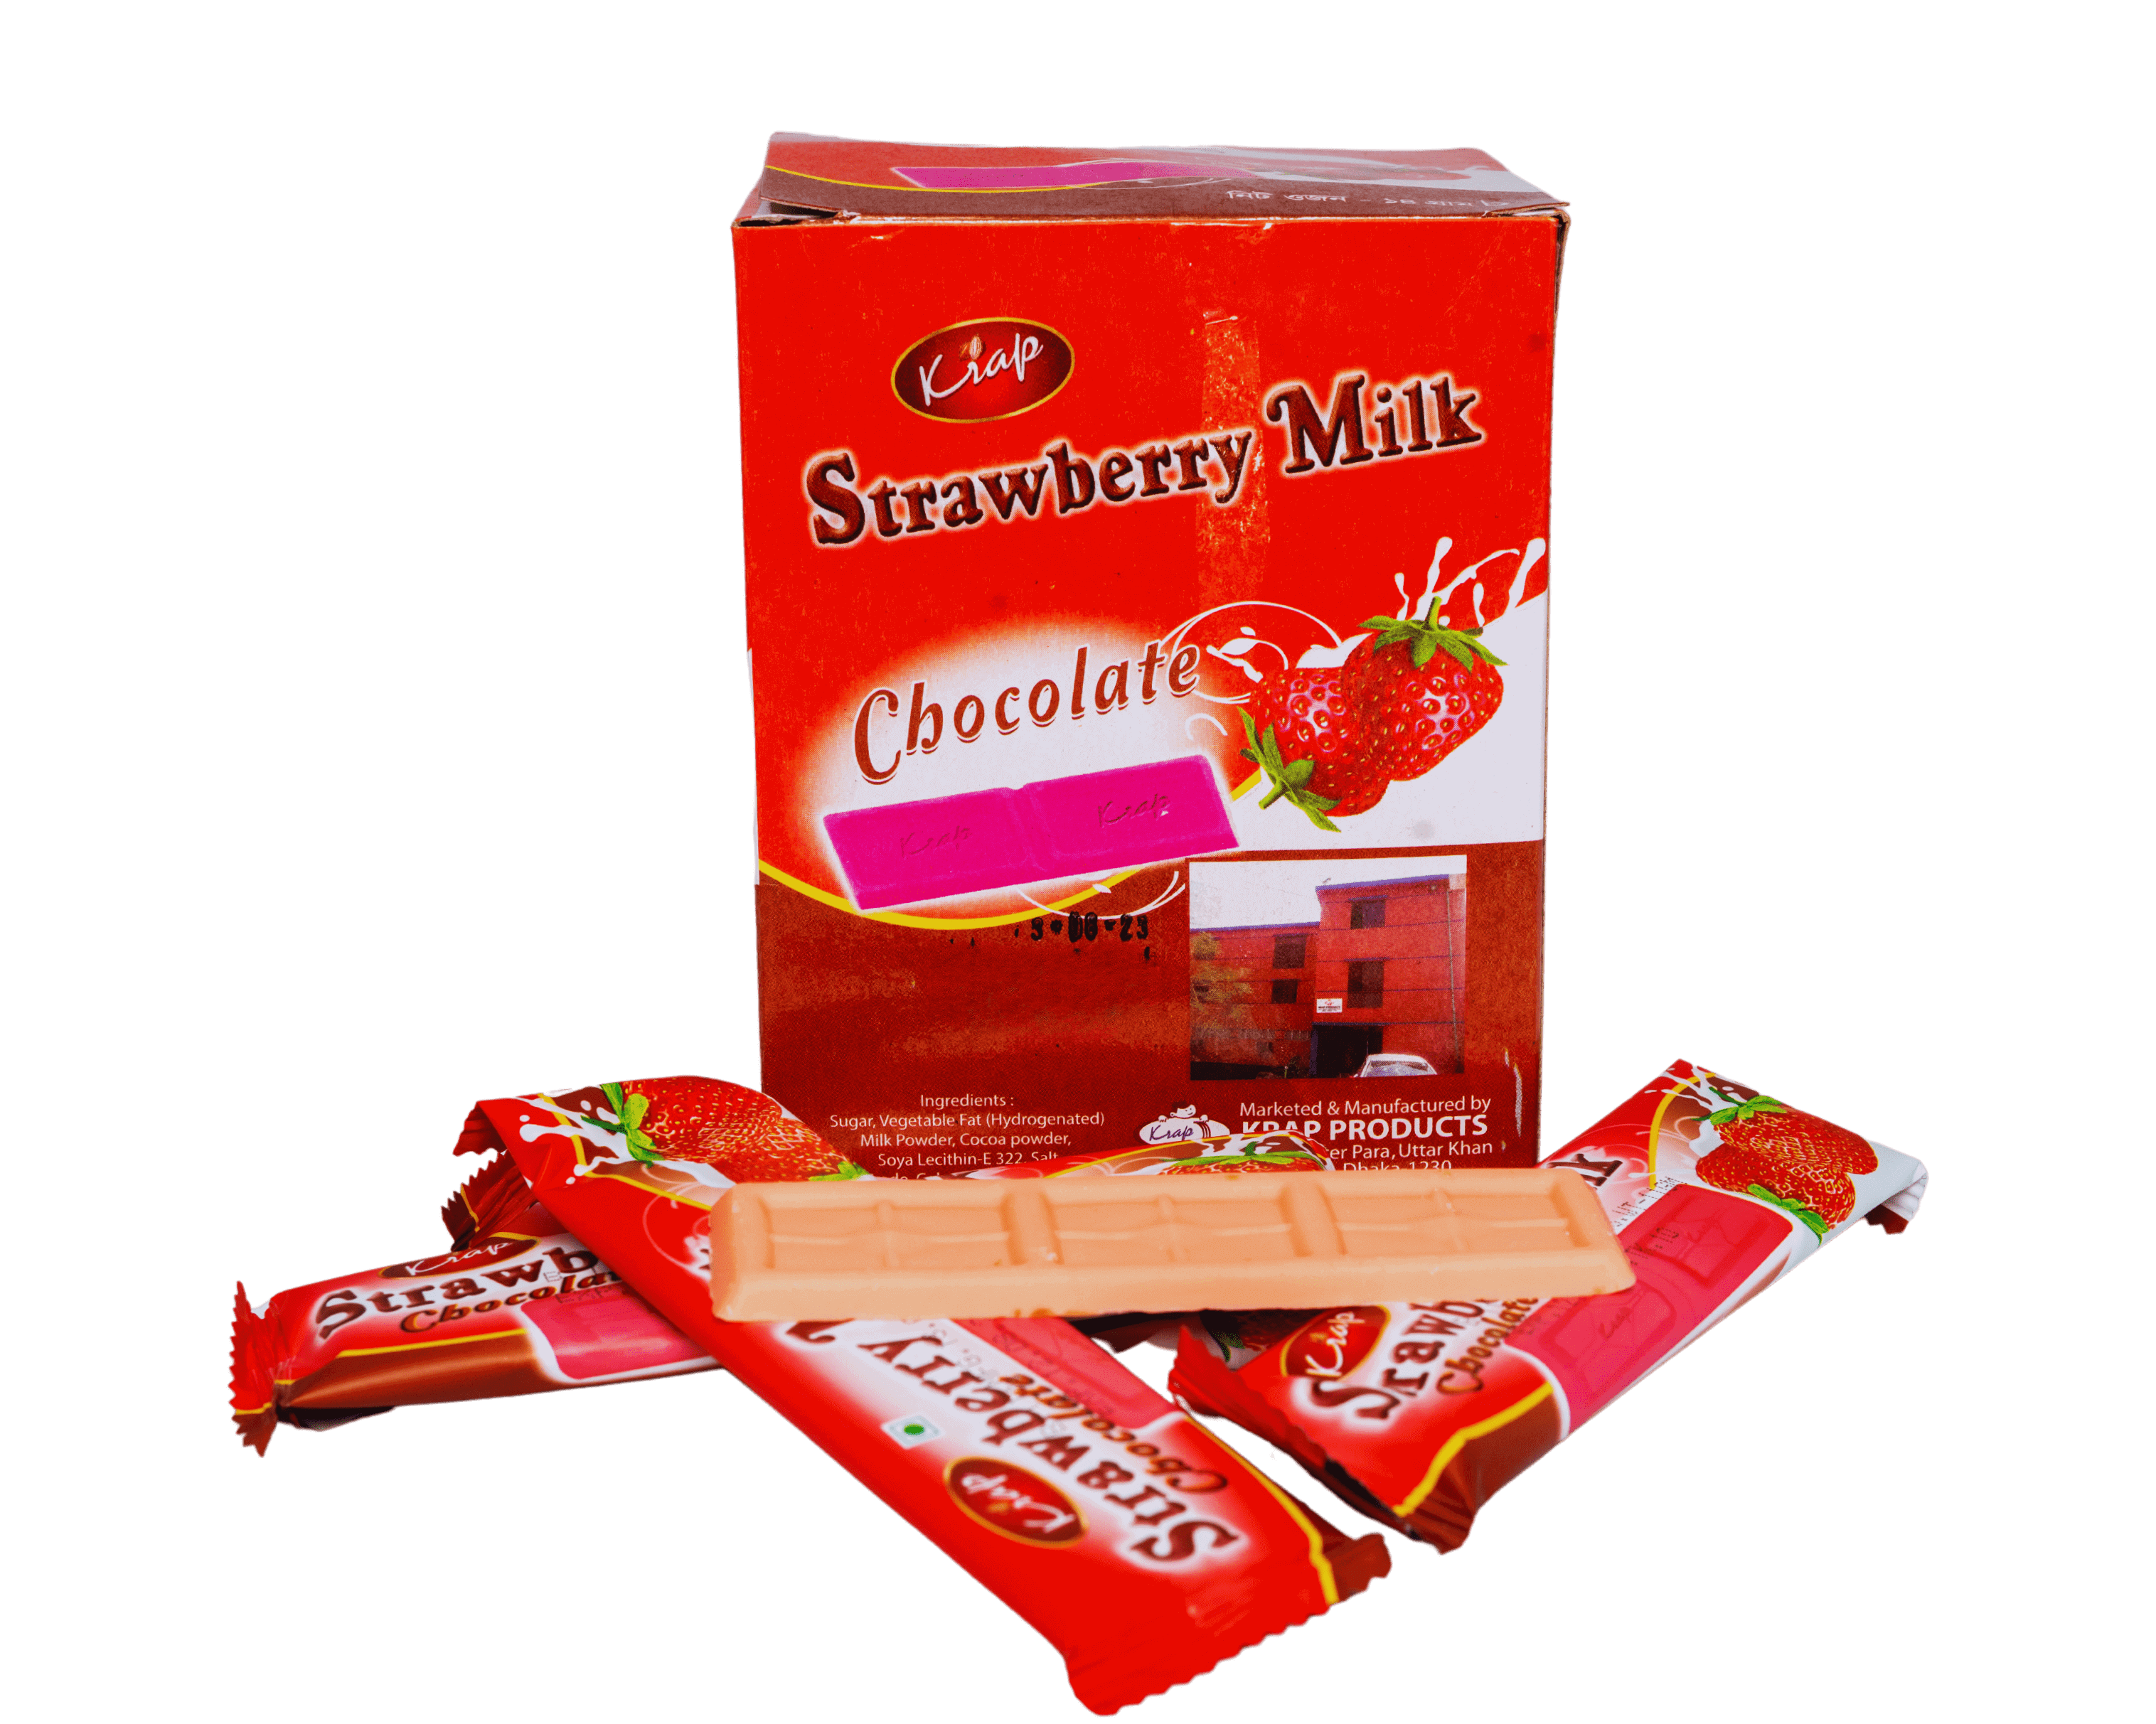 Krap Dairy Milk Strawberry Chocolate